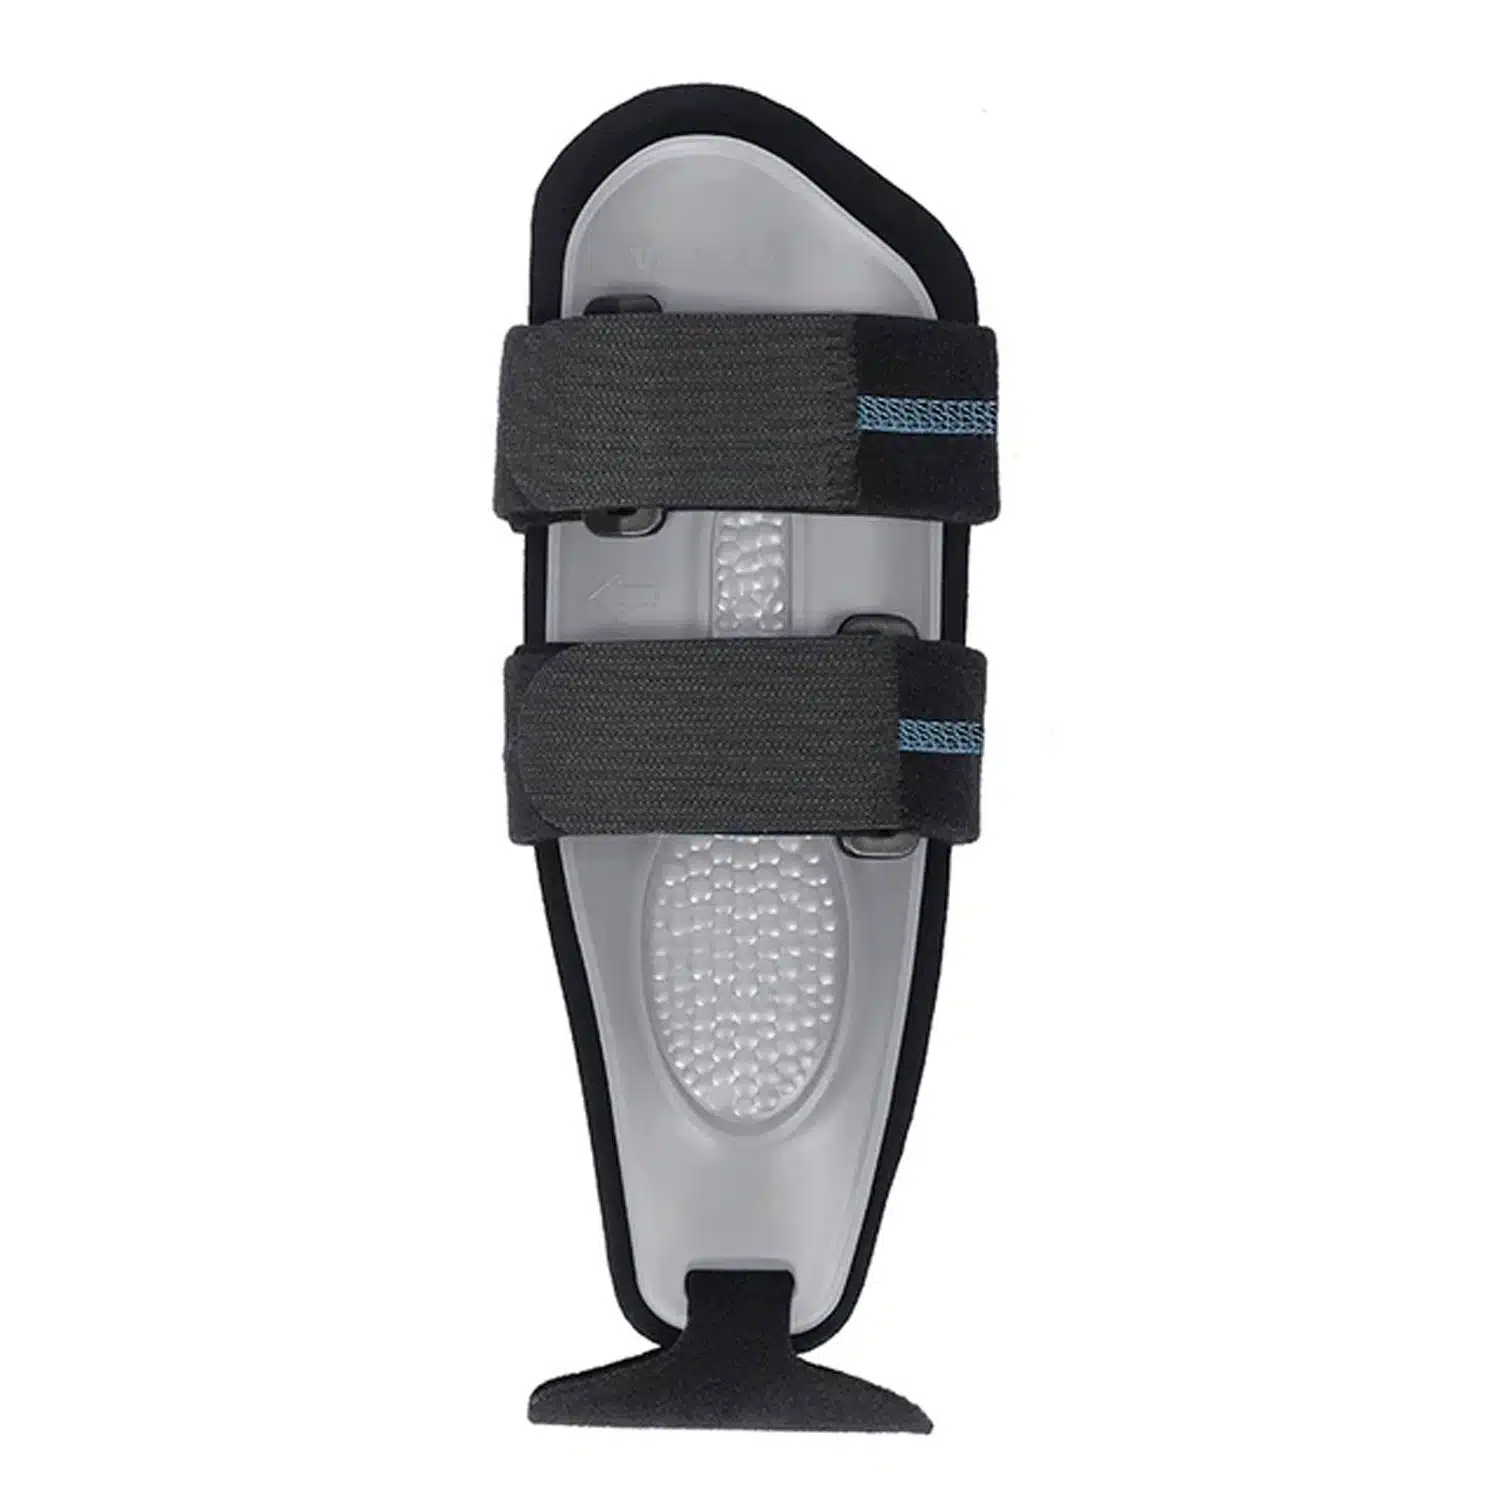 Adjustable Stirrup Ankle Brace  Injury prevention ankle support